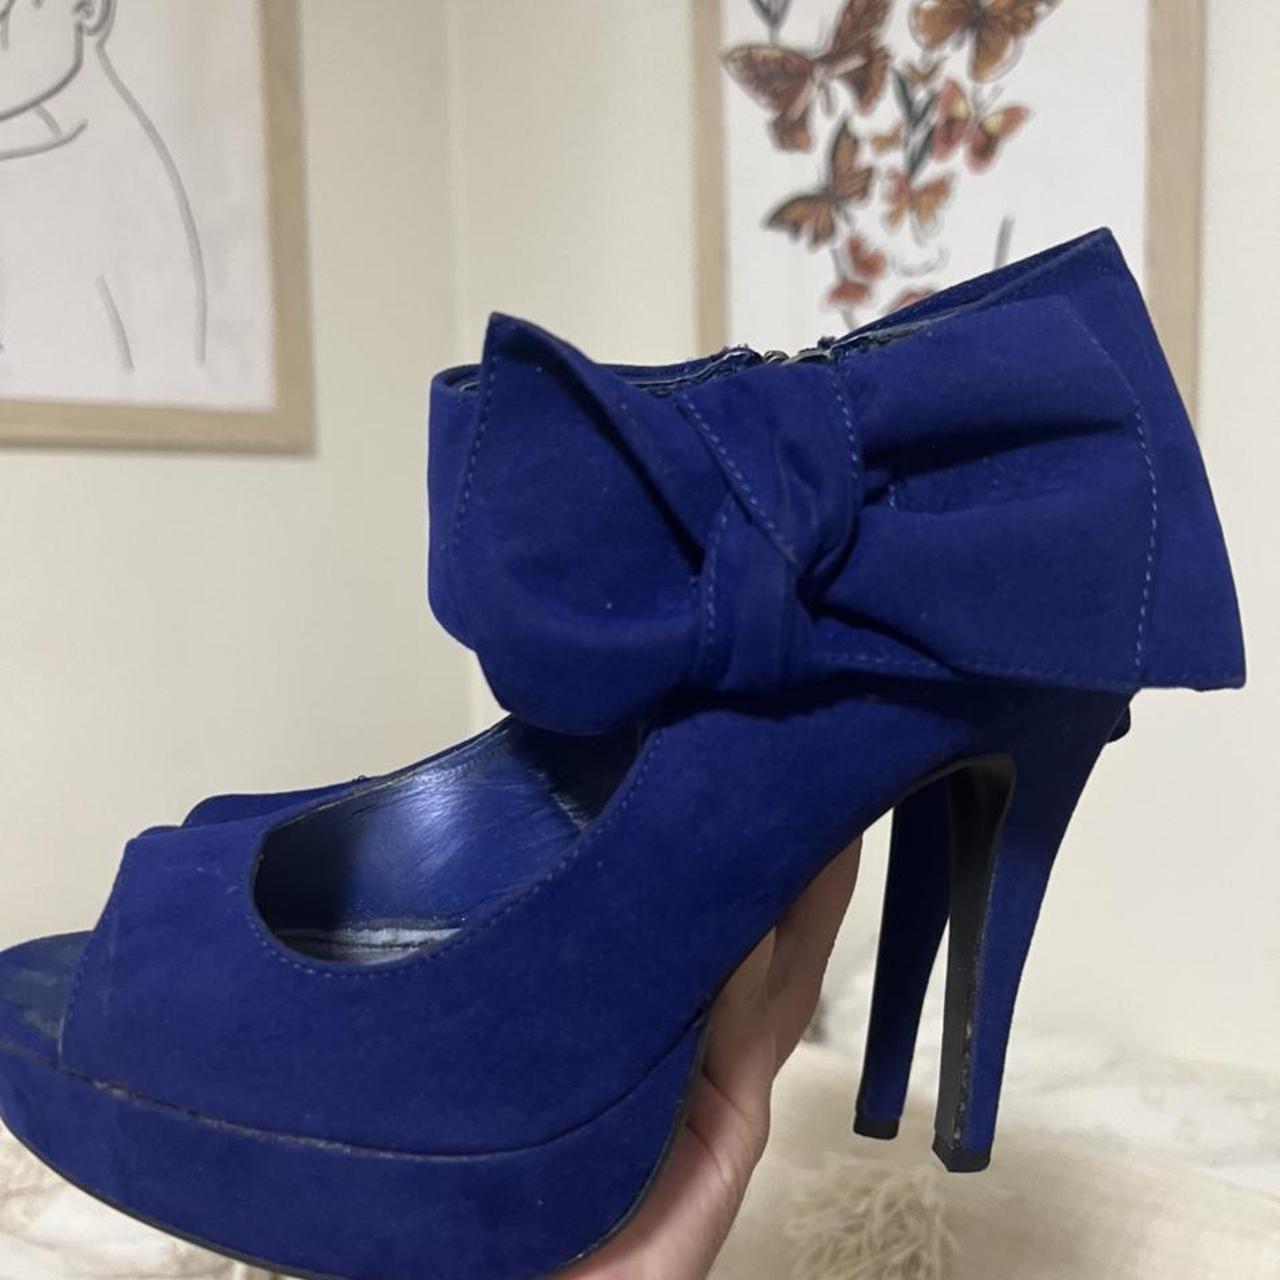 Product Image 1 - Royal blue bow platform heels